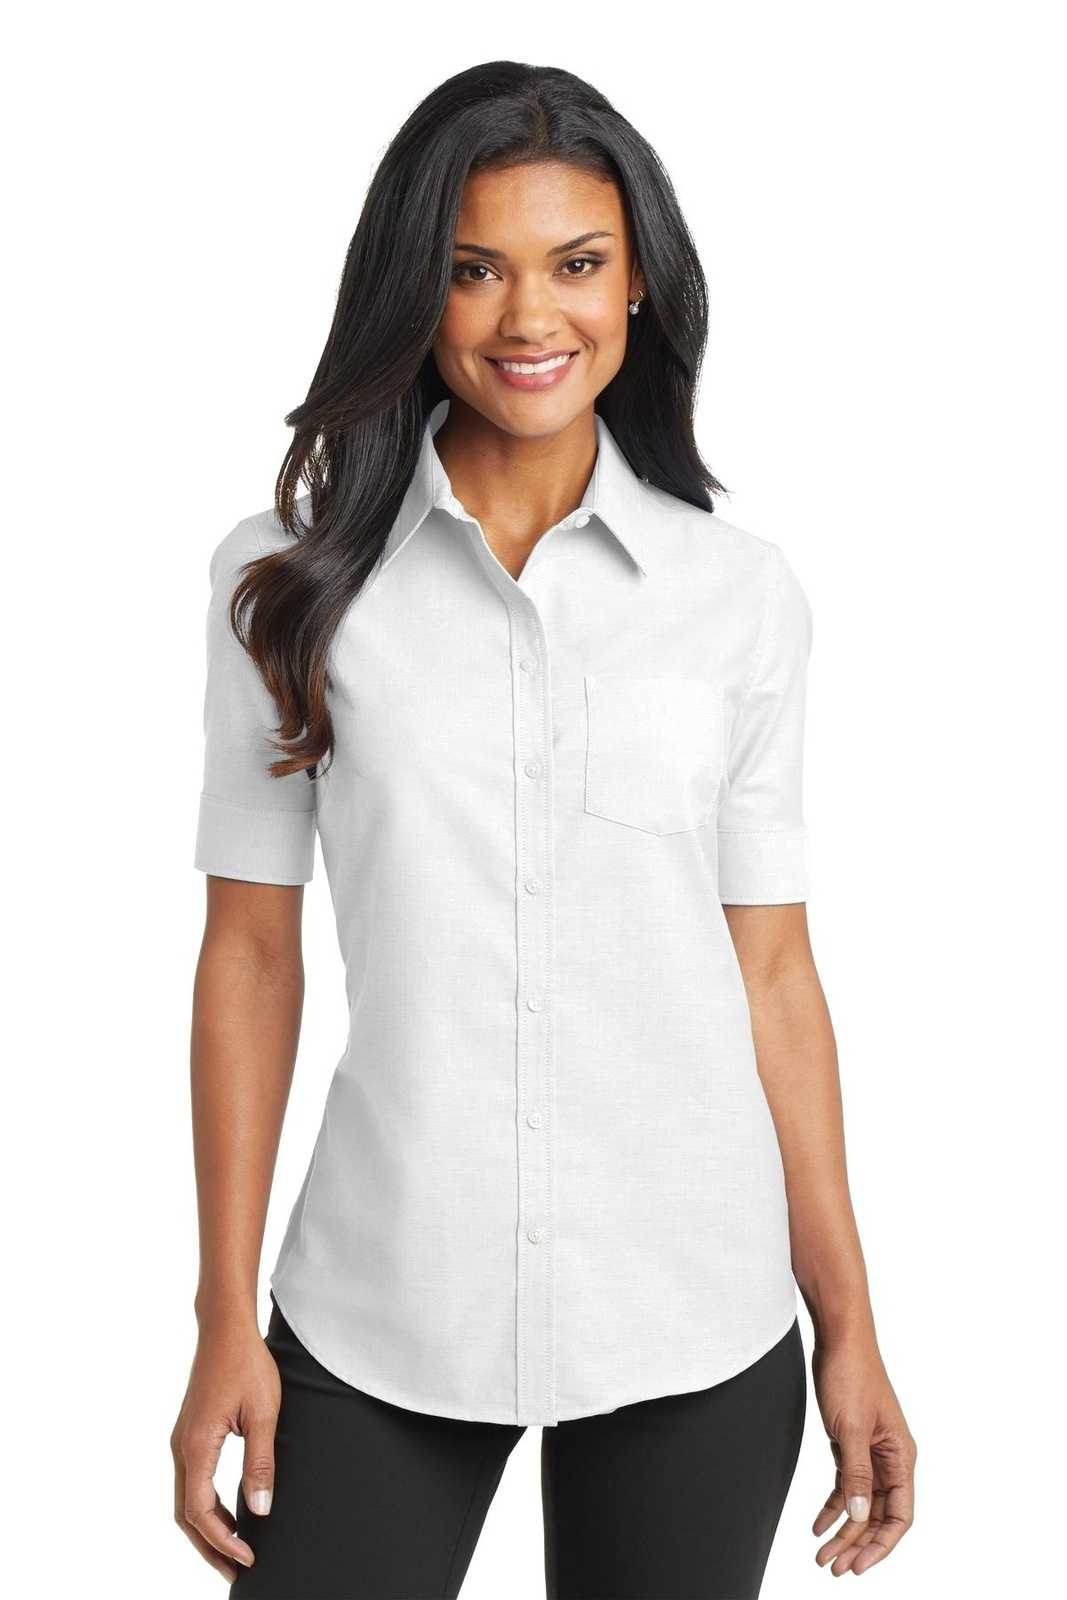 Port Authority L659 Ladies Short Sleeve Superpro Oxford Shirt - White - HIT a Double - 1